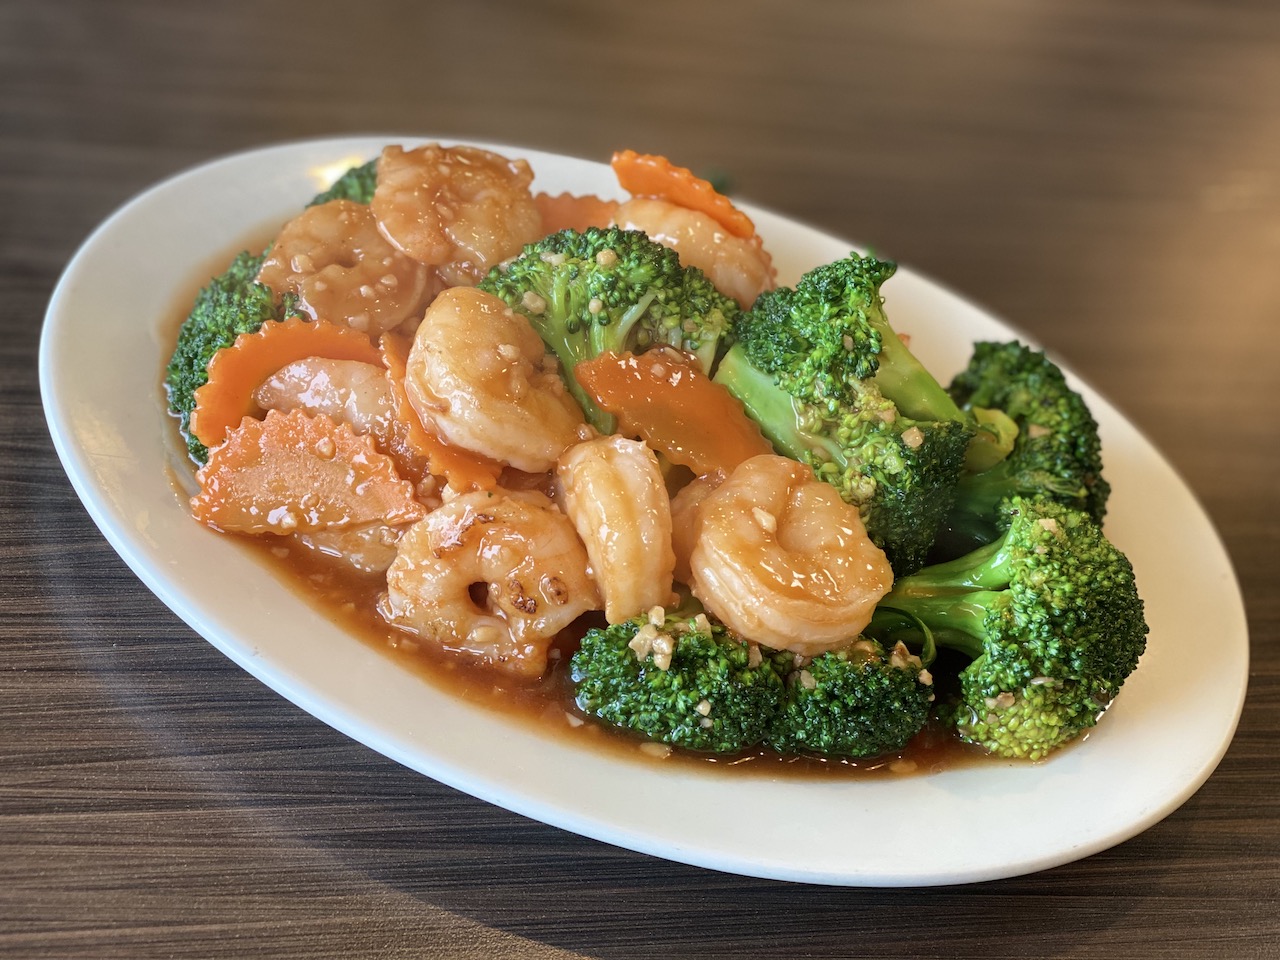 Shrimp with Broccoli 芥蓝虾